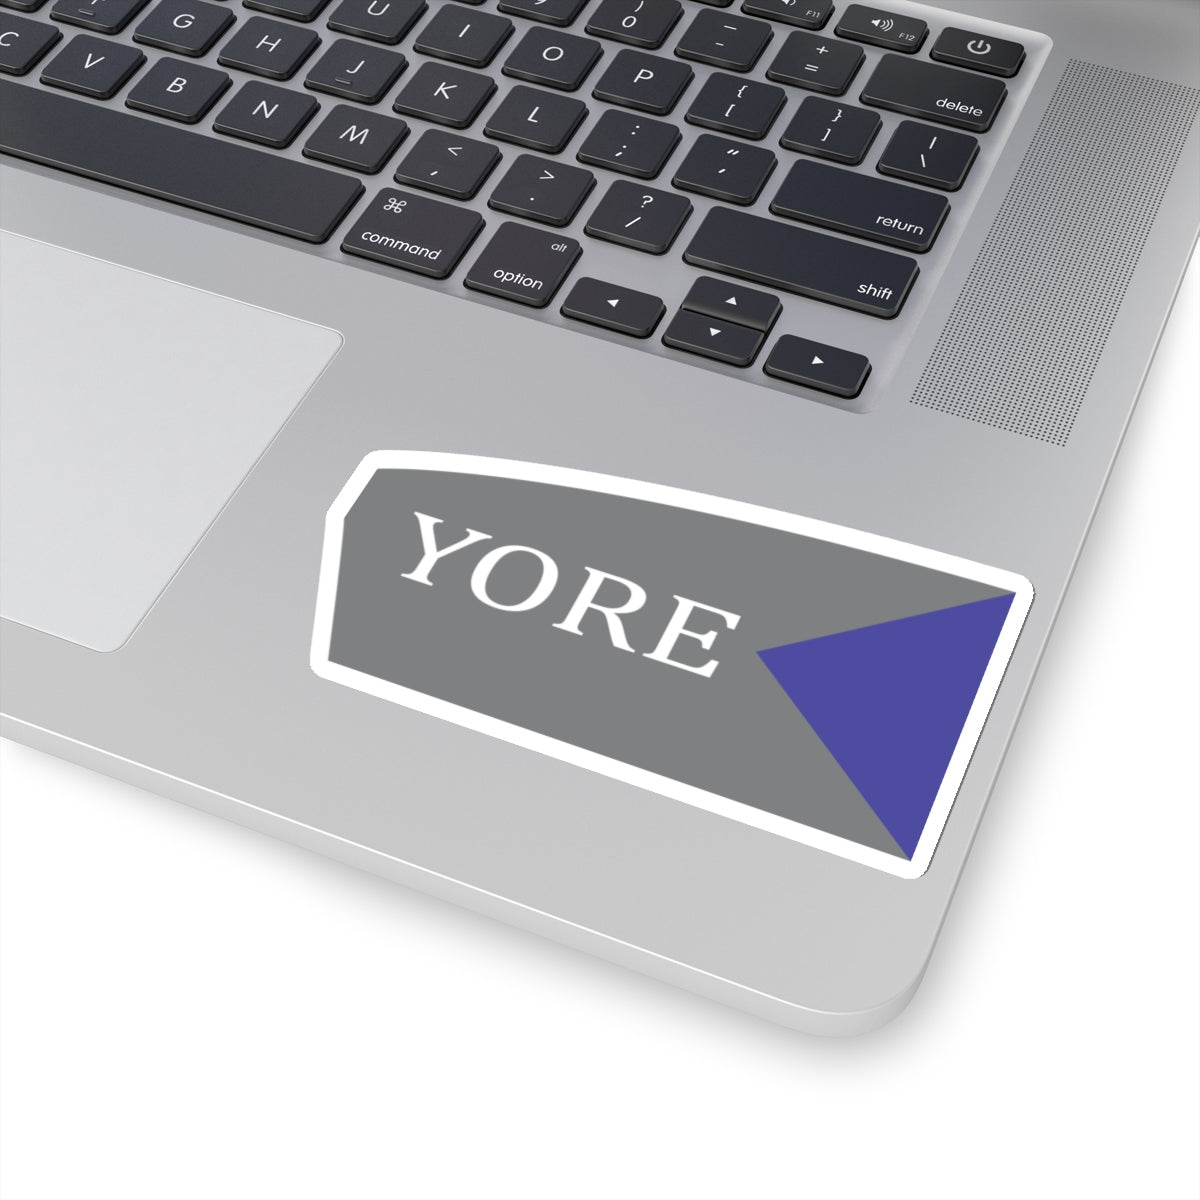 Vikings of Yore (Western Washington Alum) Sticker